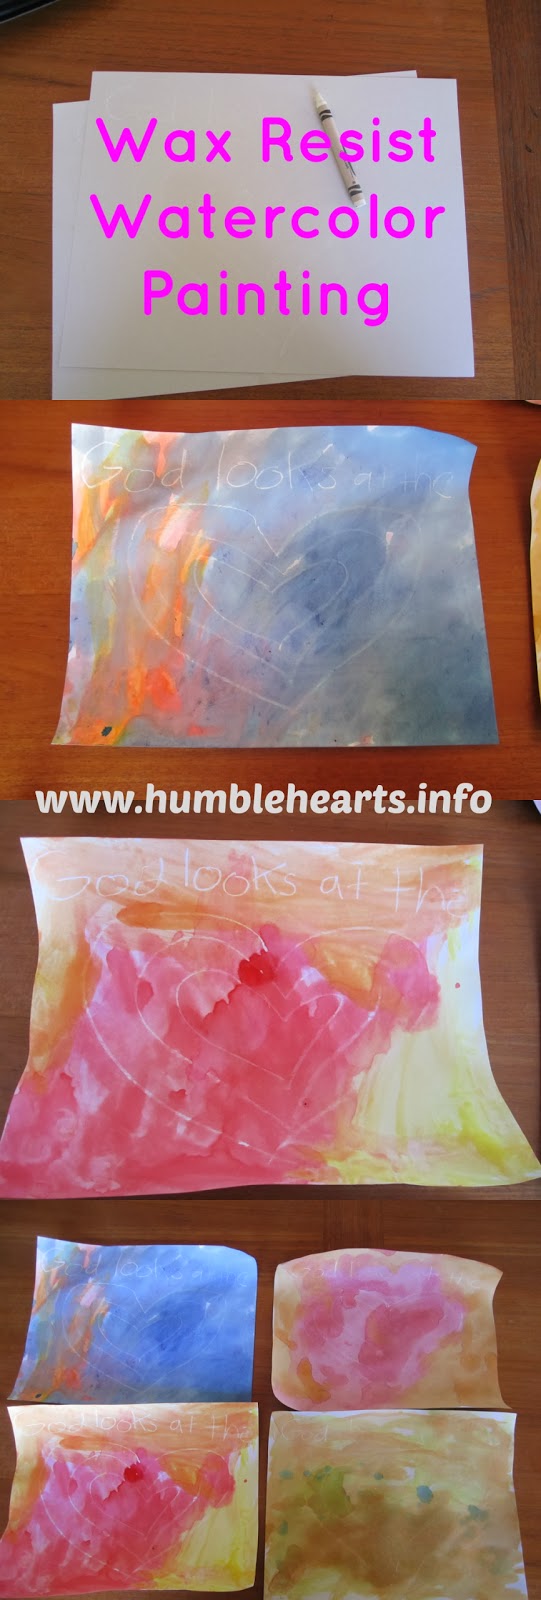 http://www.humblehearts.info/2014/02/god-looks-at-heart-teaching-ideas.html